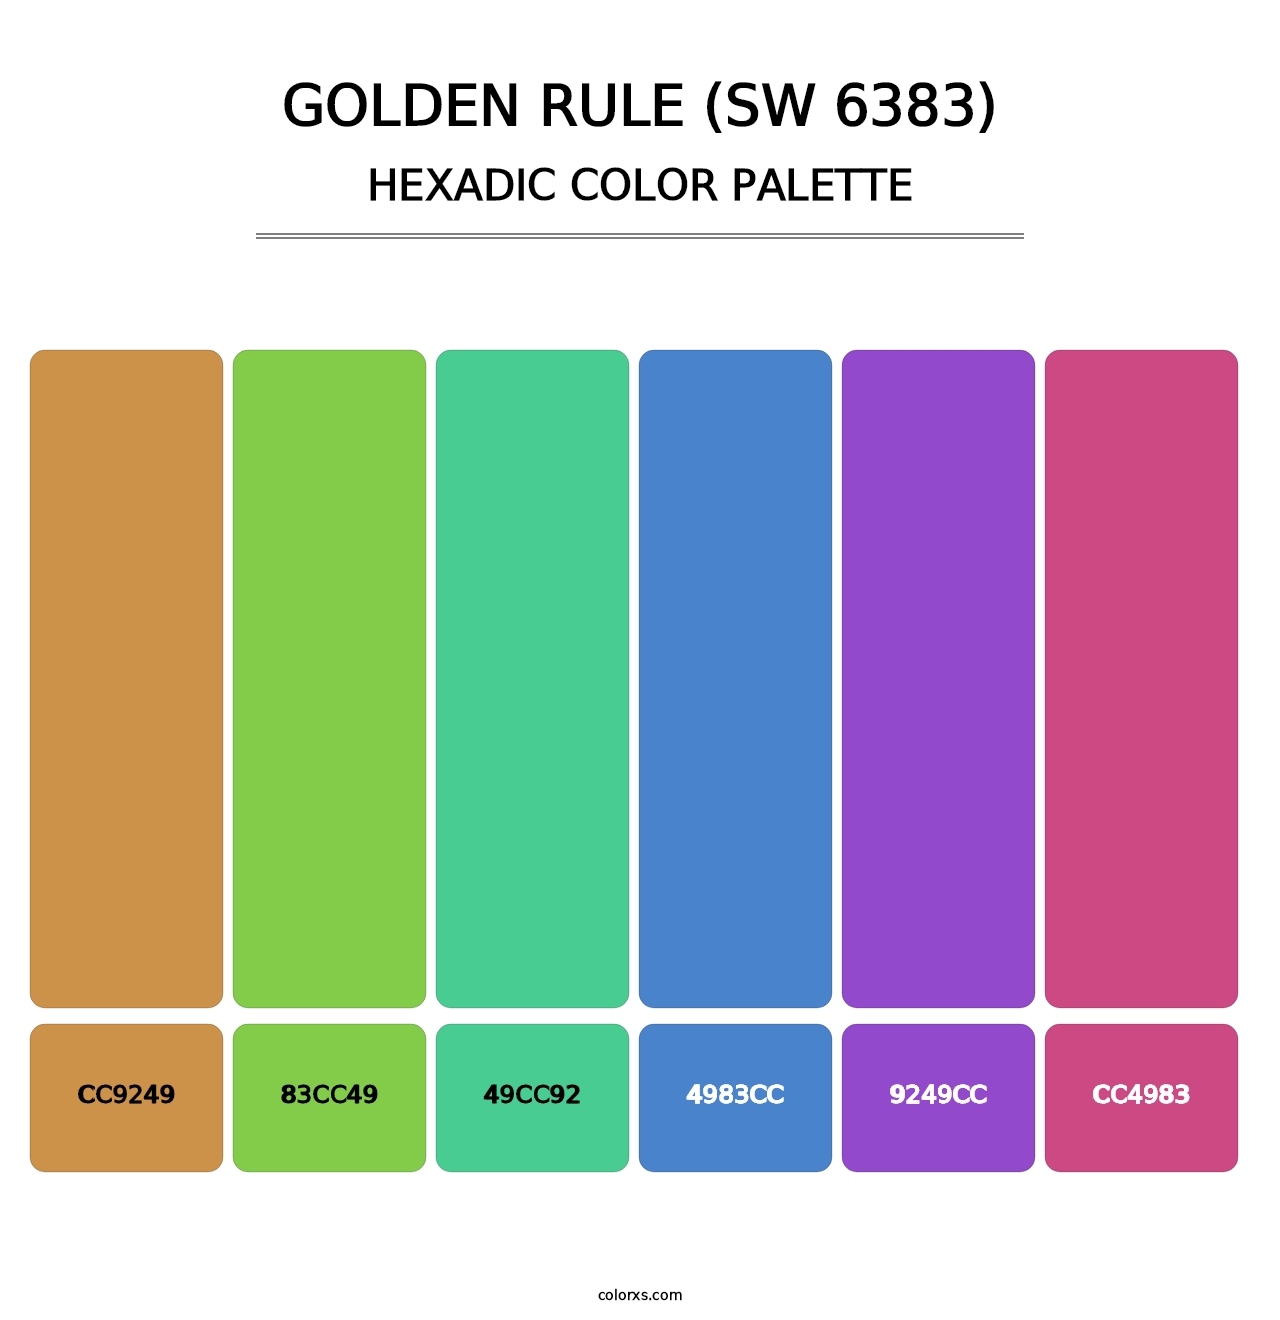 Golden Rule (SW 6383) - Hexadic Color Palette